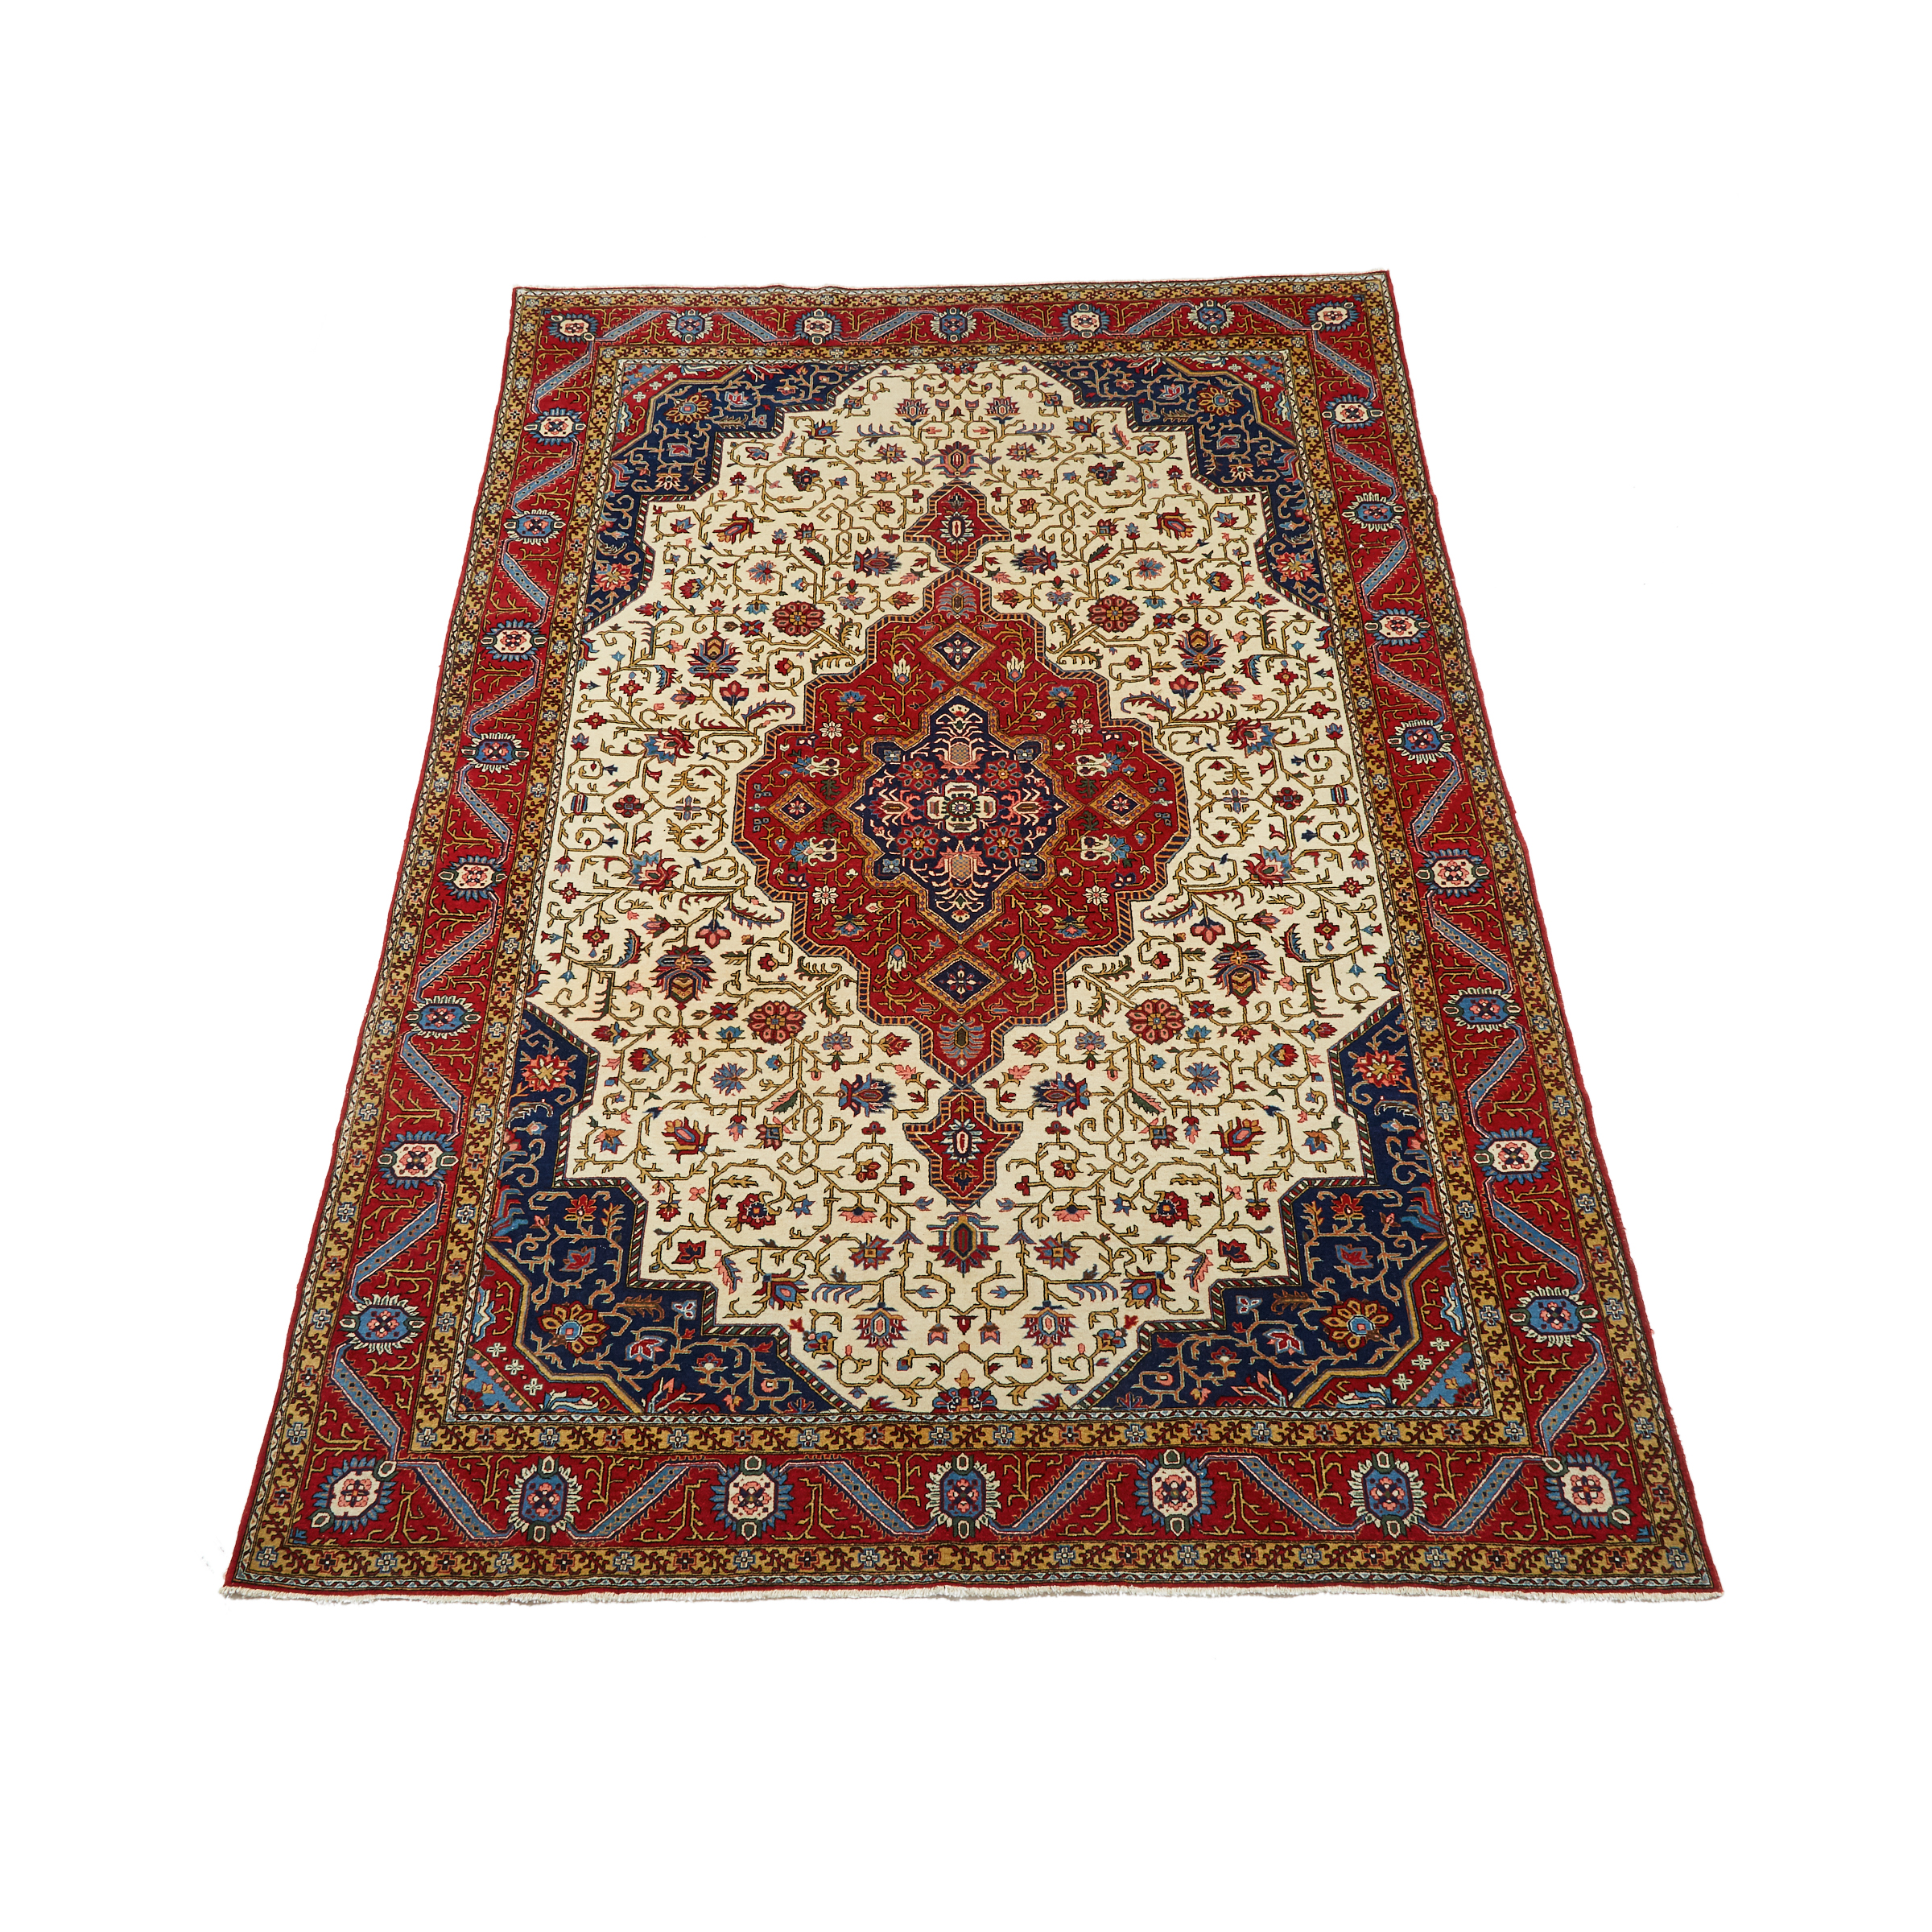 South Persian Carpet, late 20th century